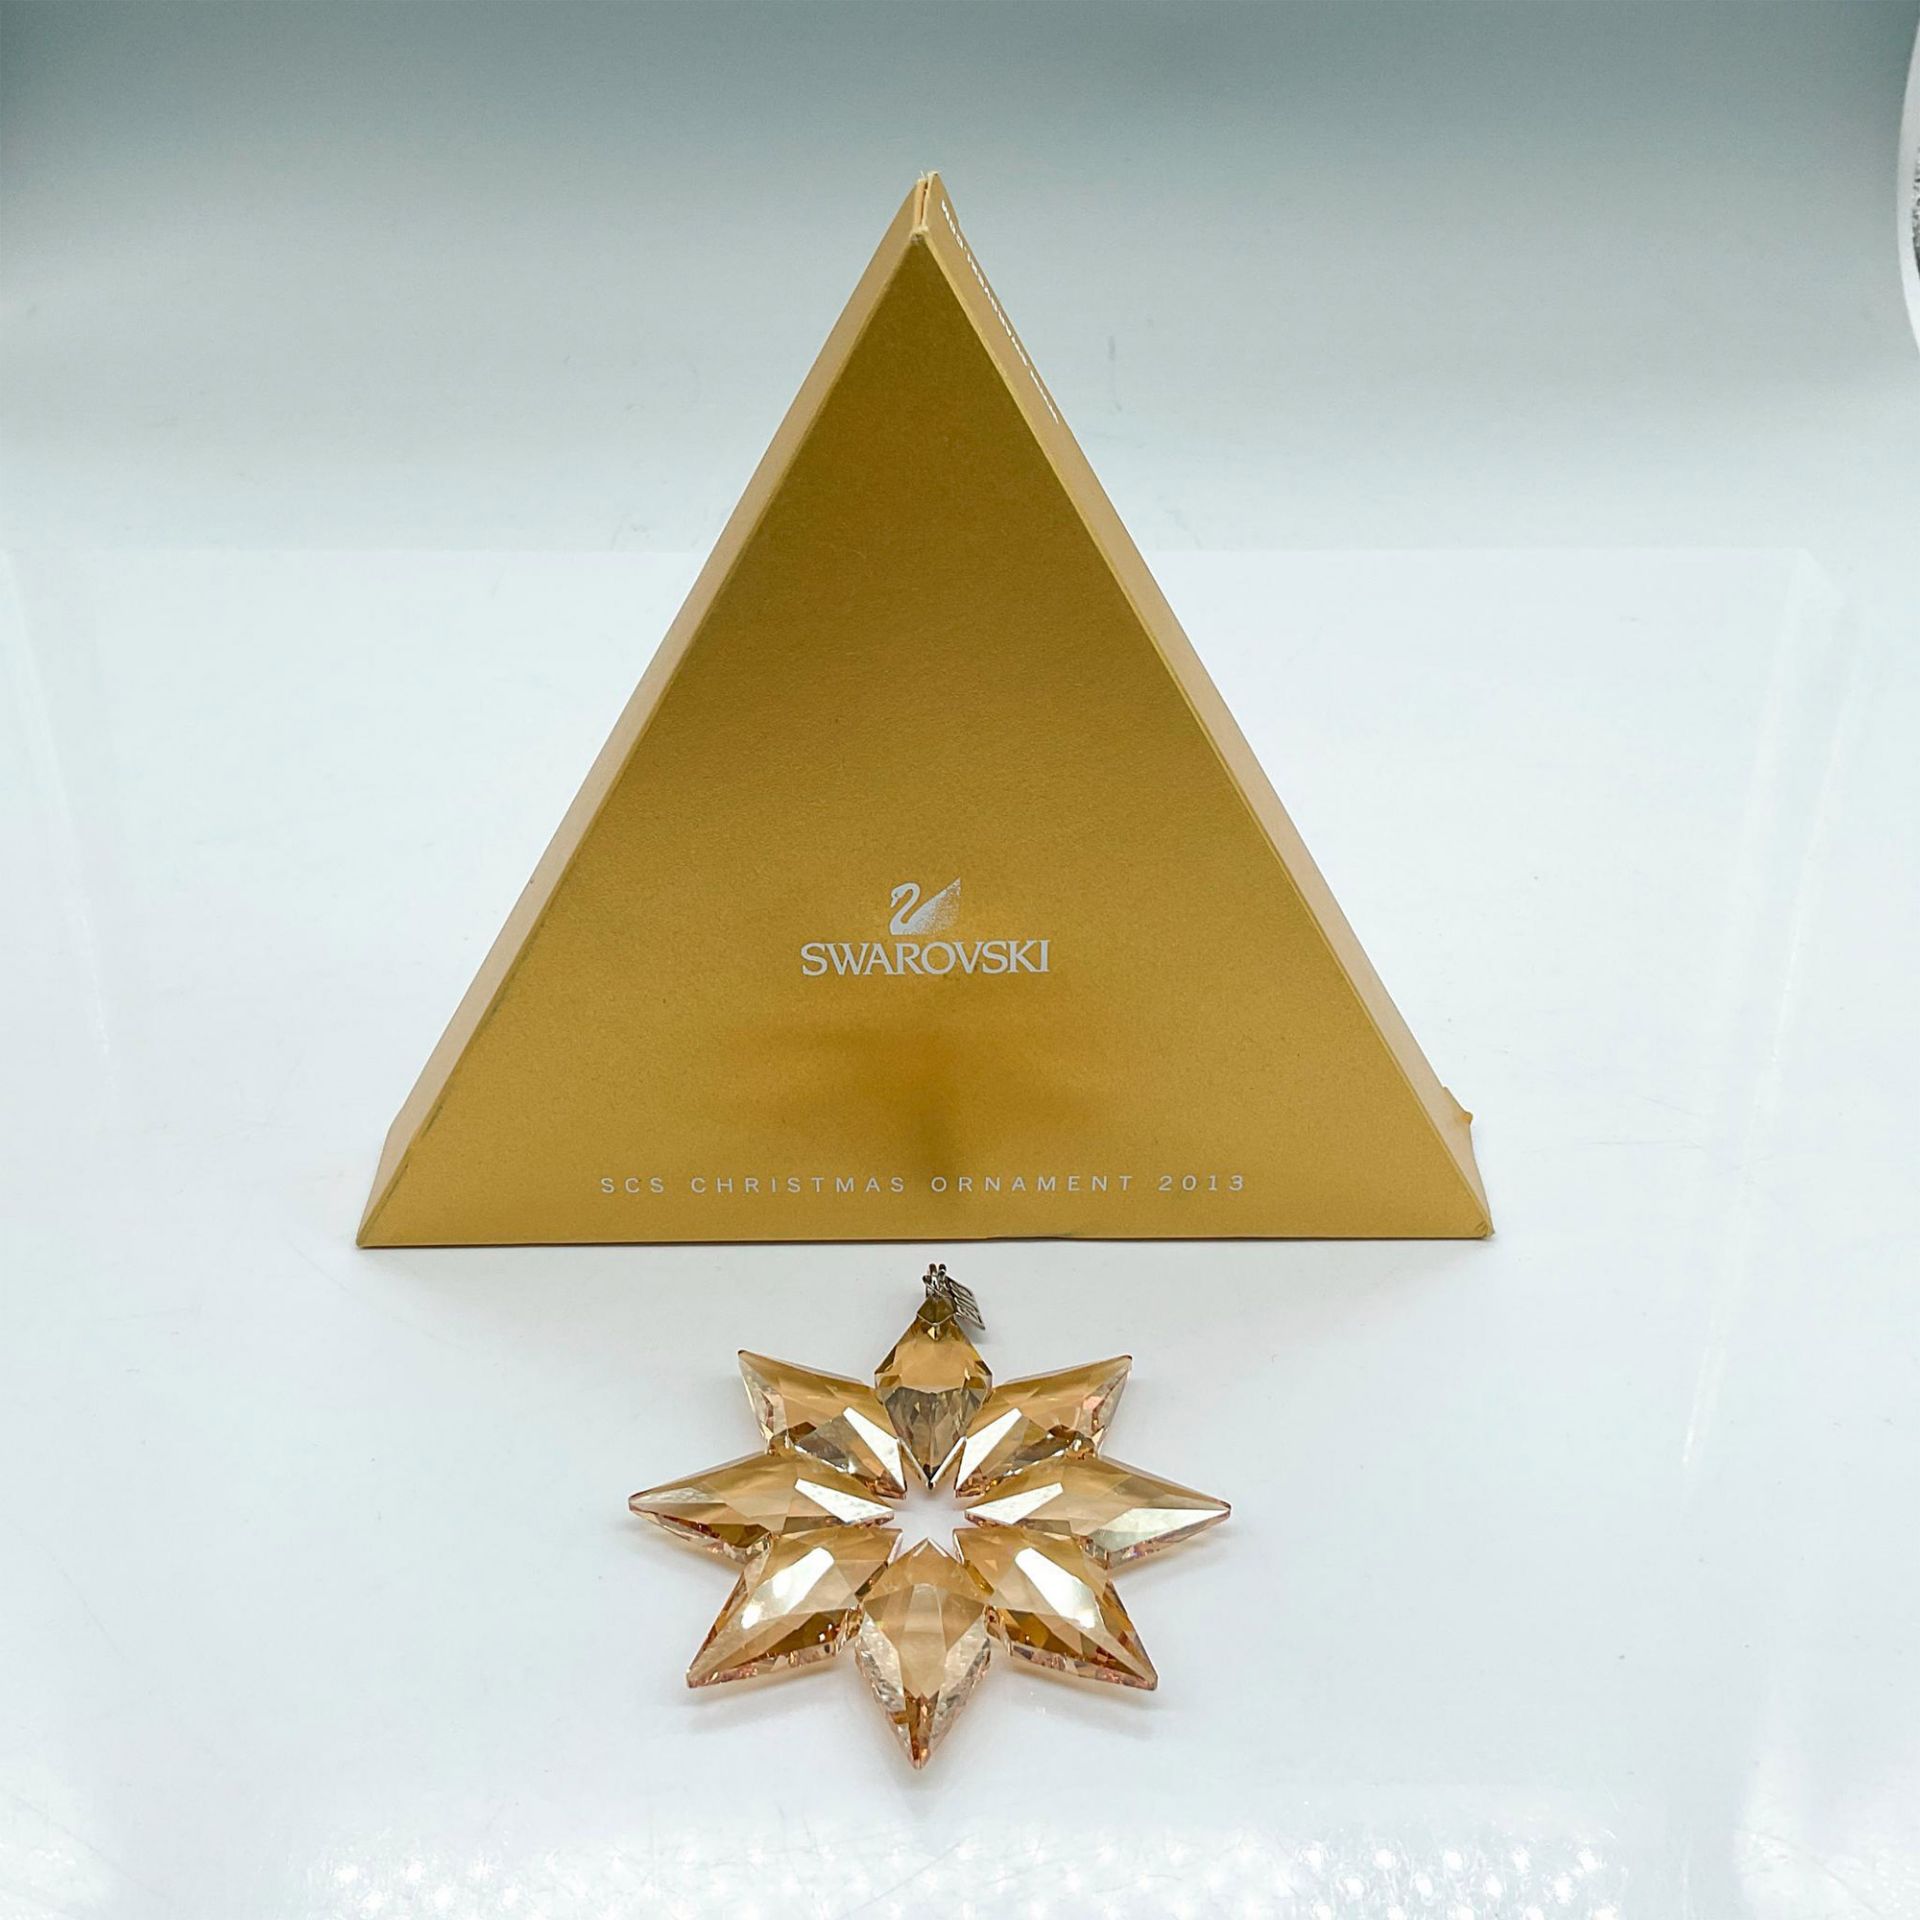 Swarovski Crystal SCS Gold Christmas Ornament 2013 - Image 3 of 3